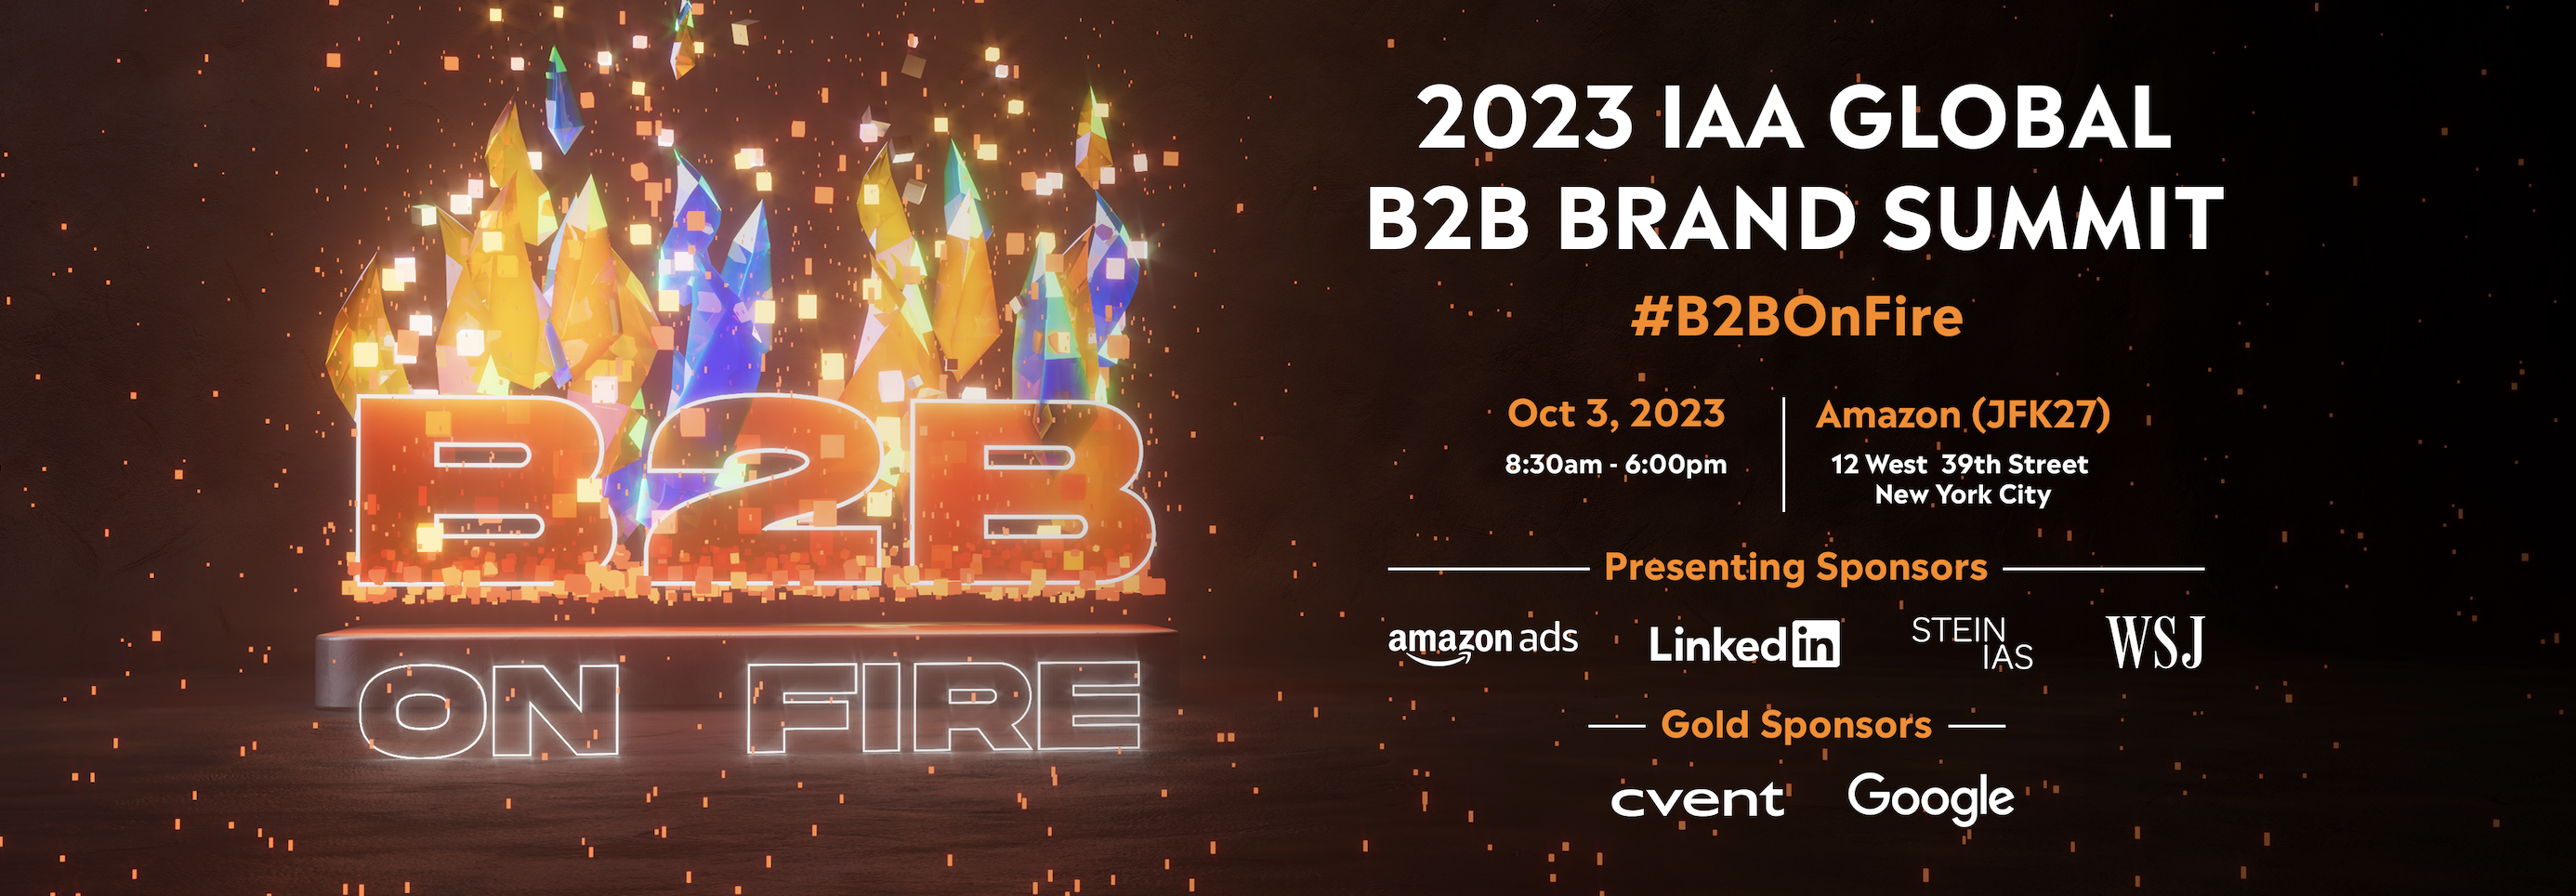 2023 IAA Global B2B Brand Summit